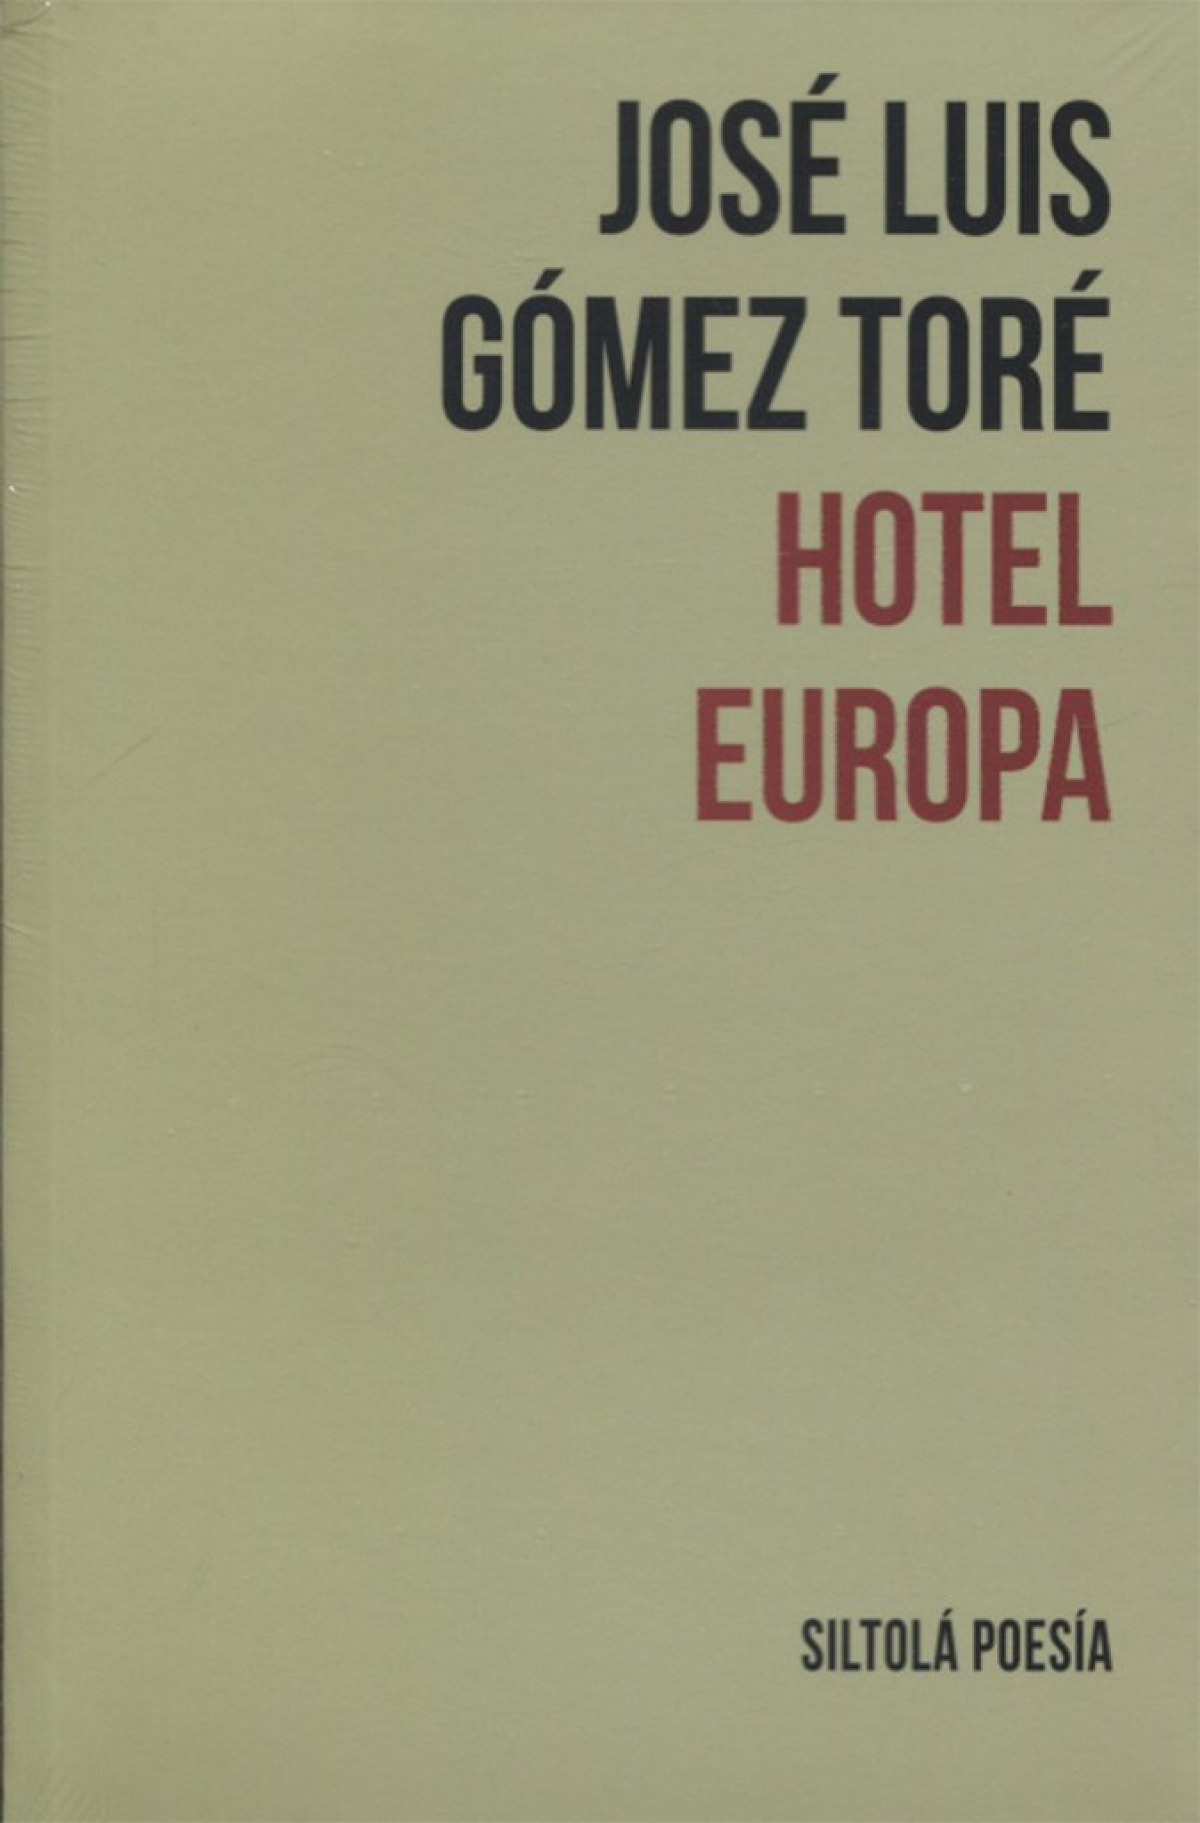 Hotel europa - Gomez Tore